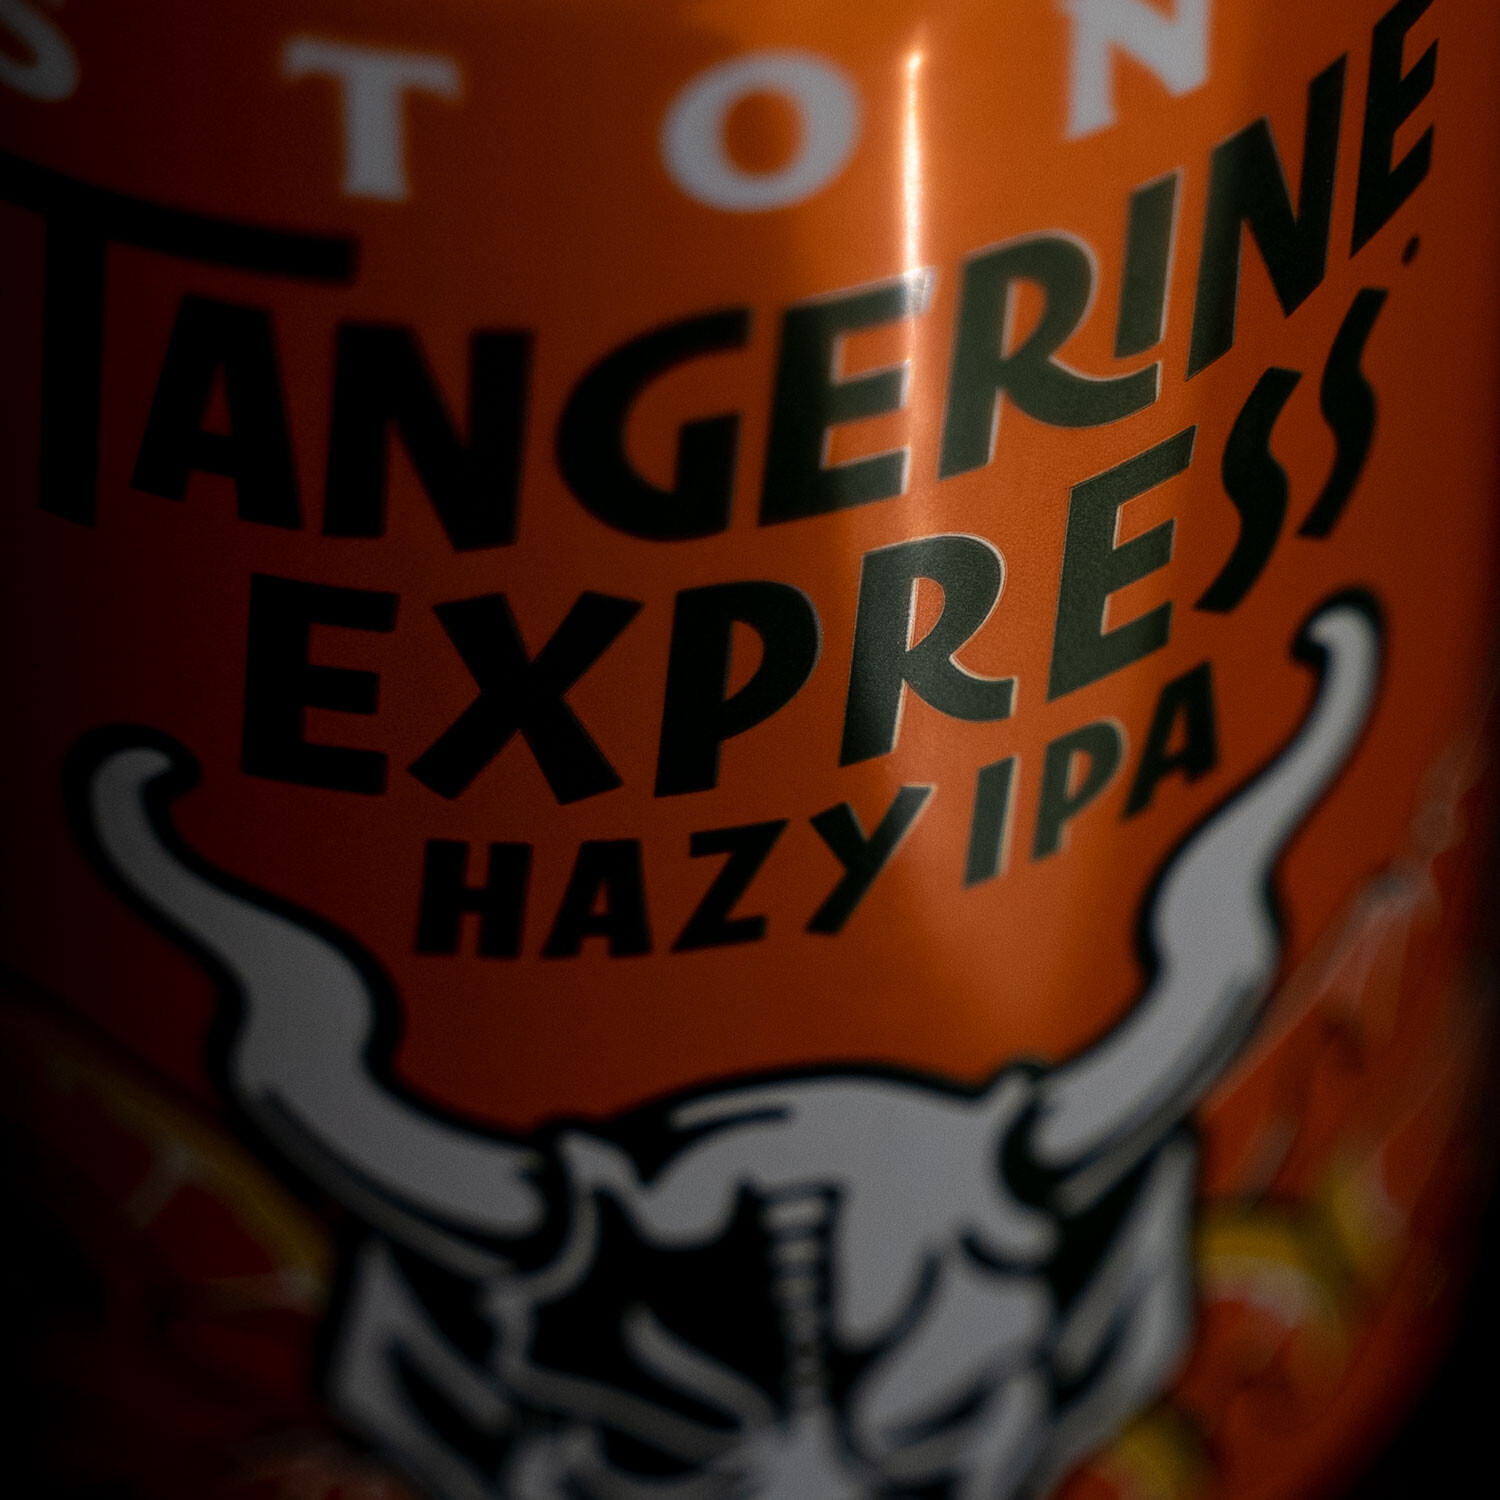 Stone Tangerine Express Hazy IPA close-up